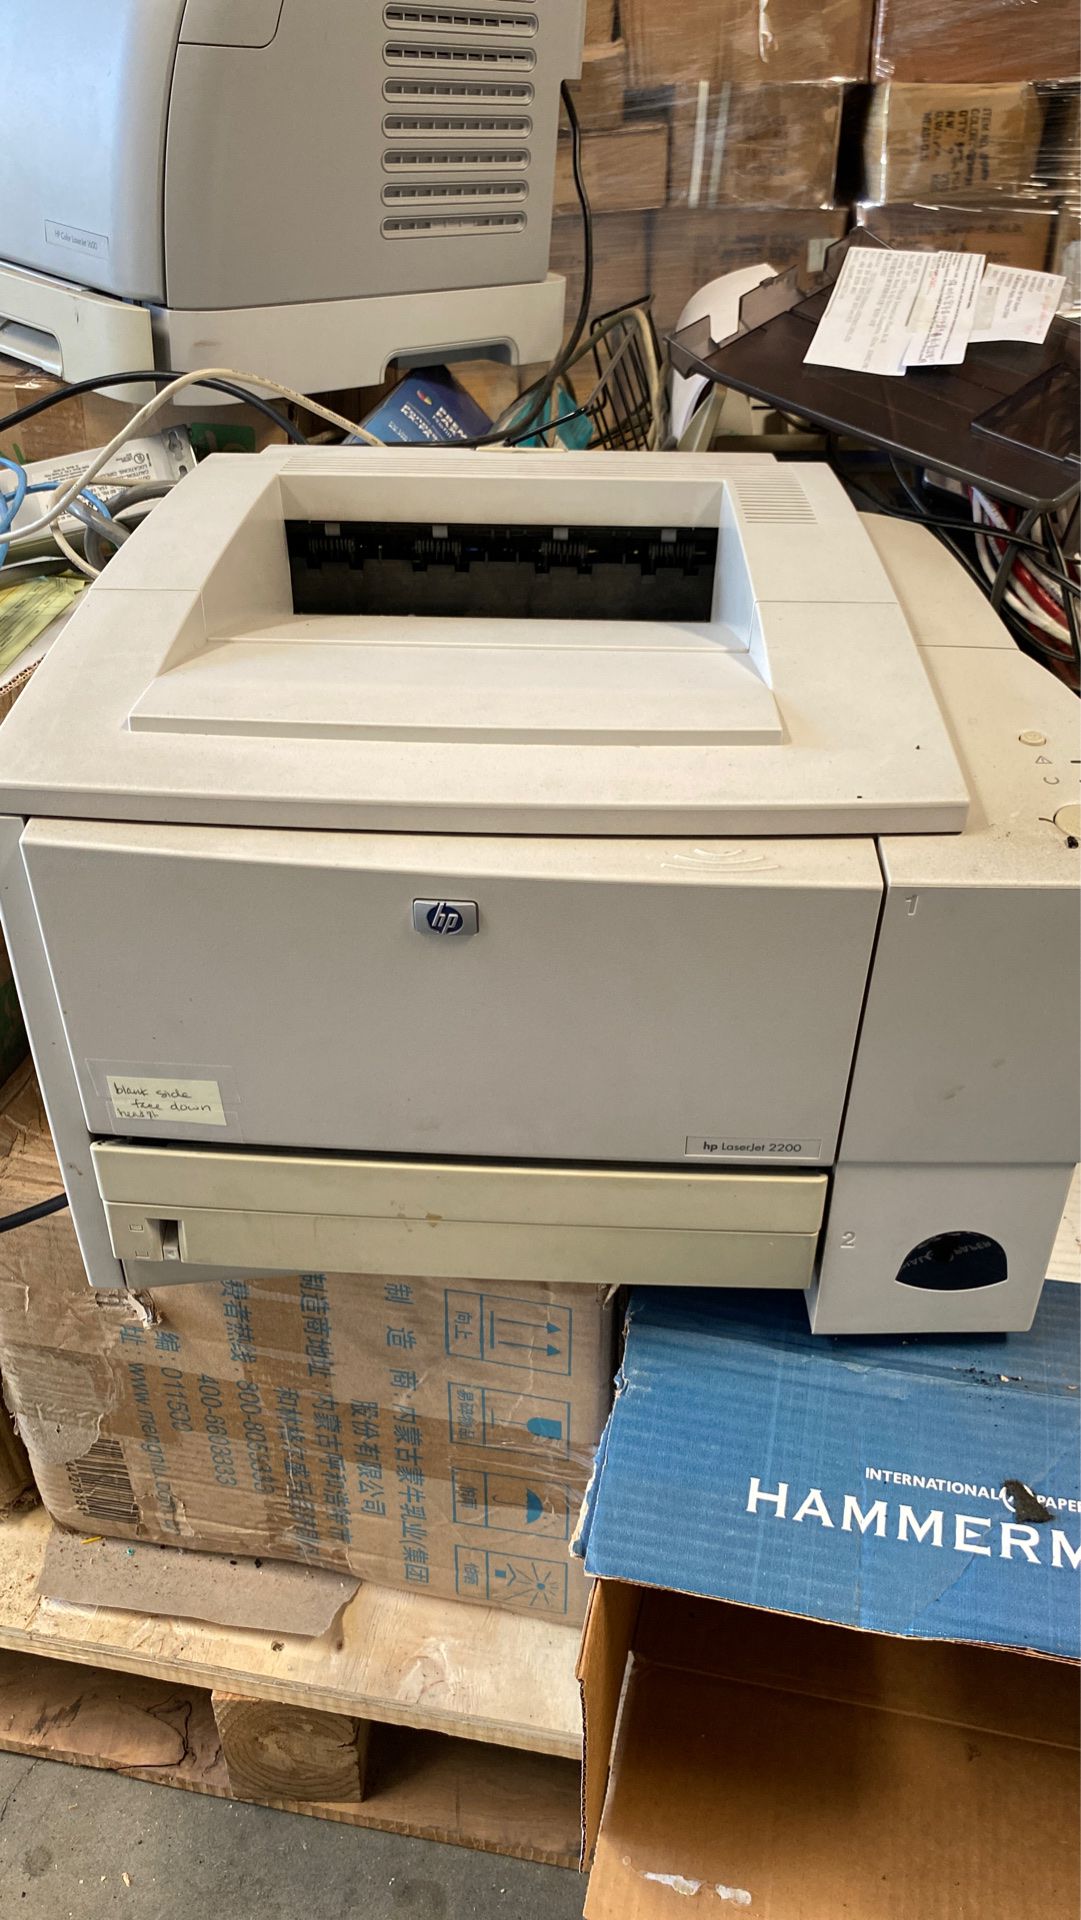 HP LaserJet 2200 printer